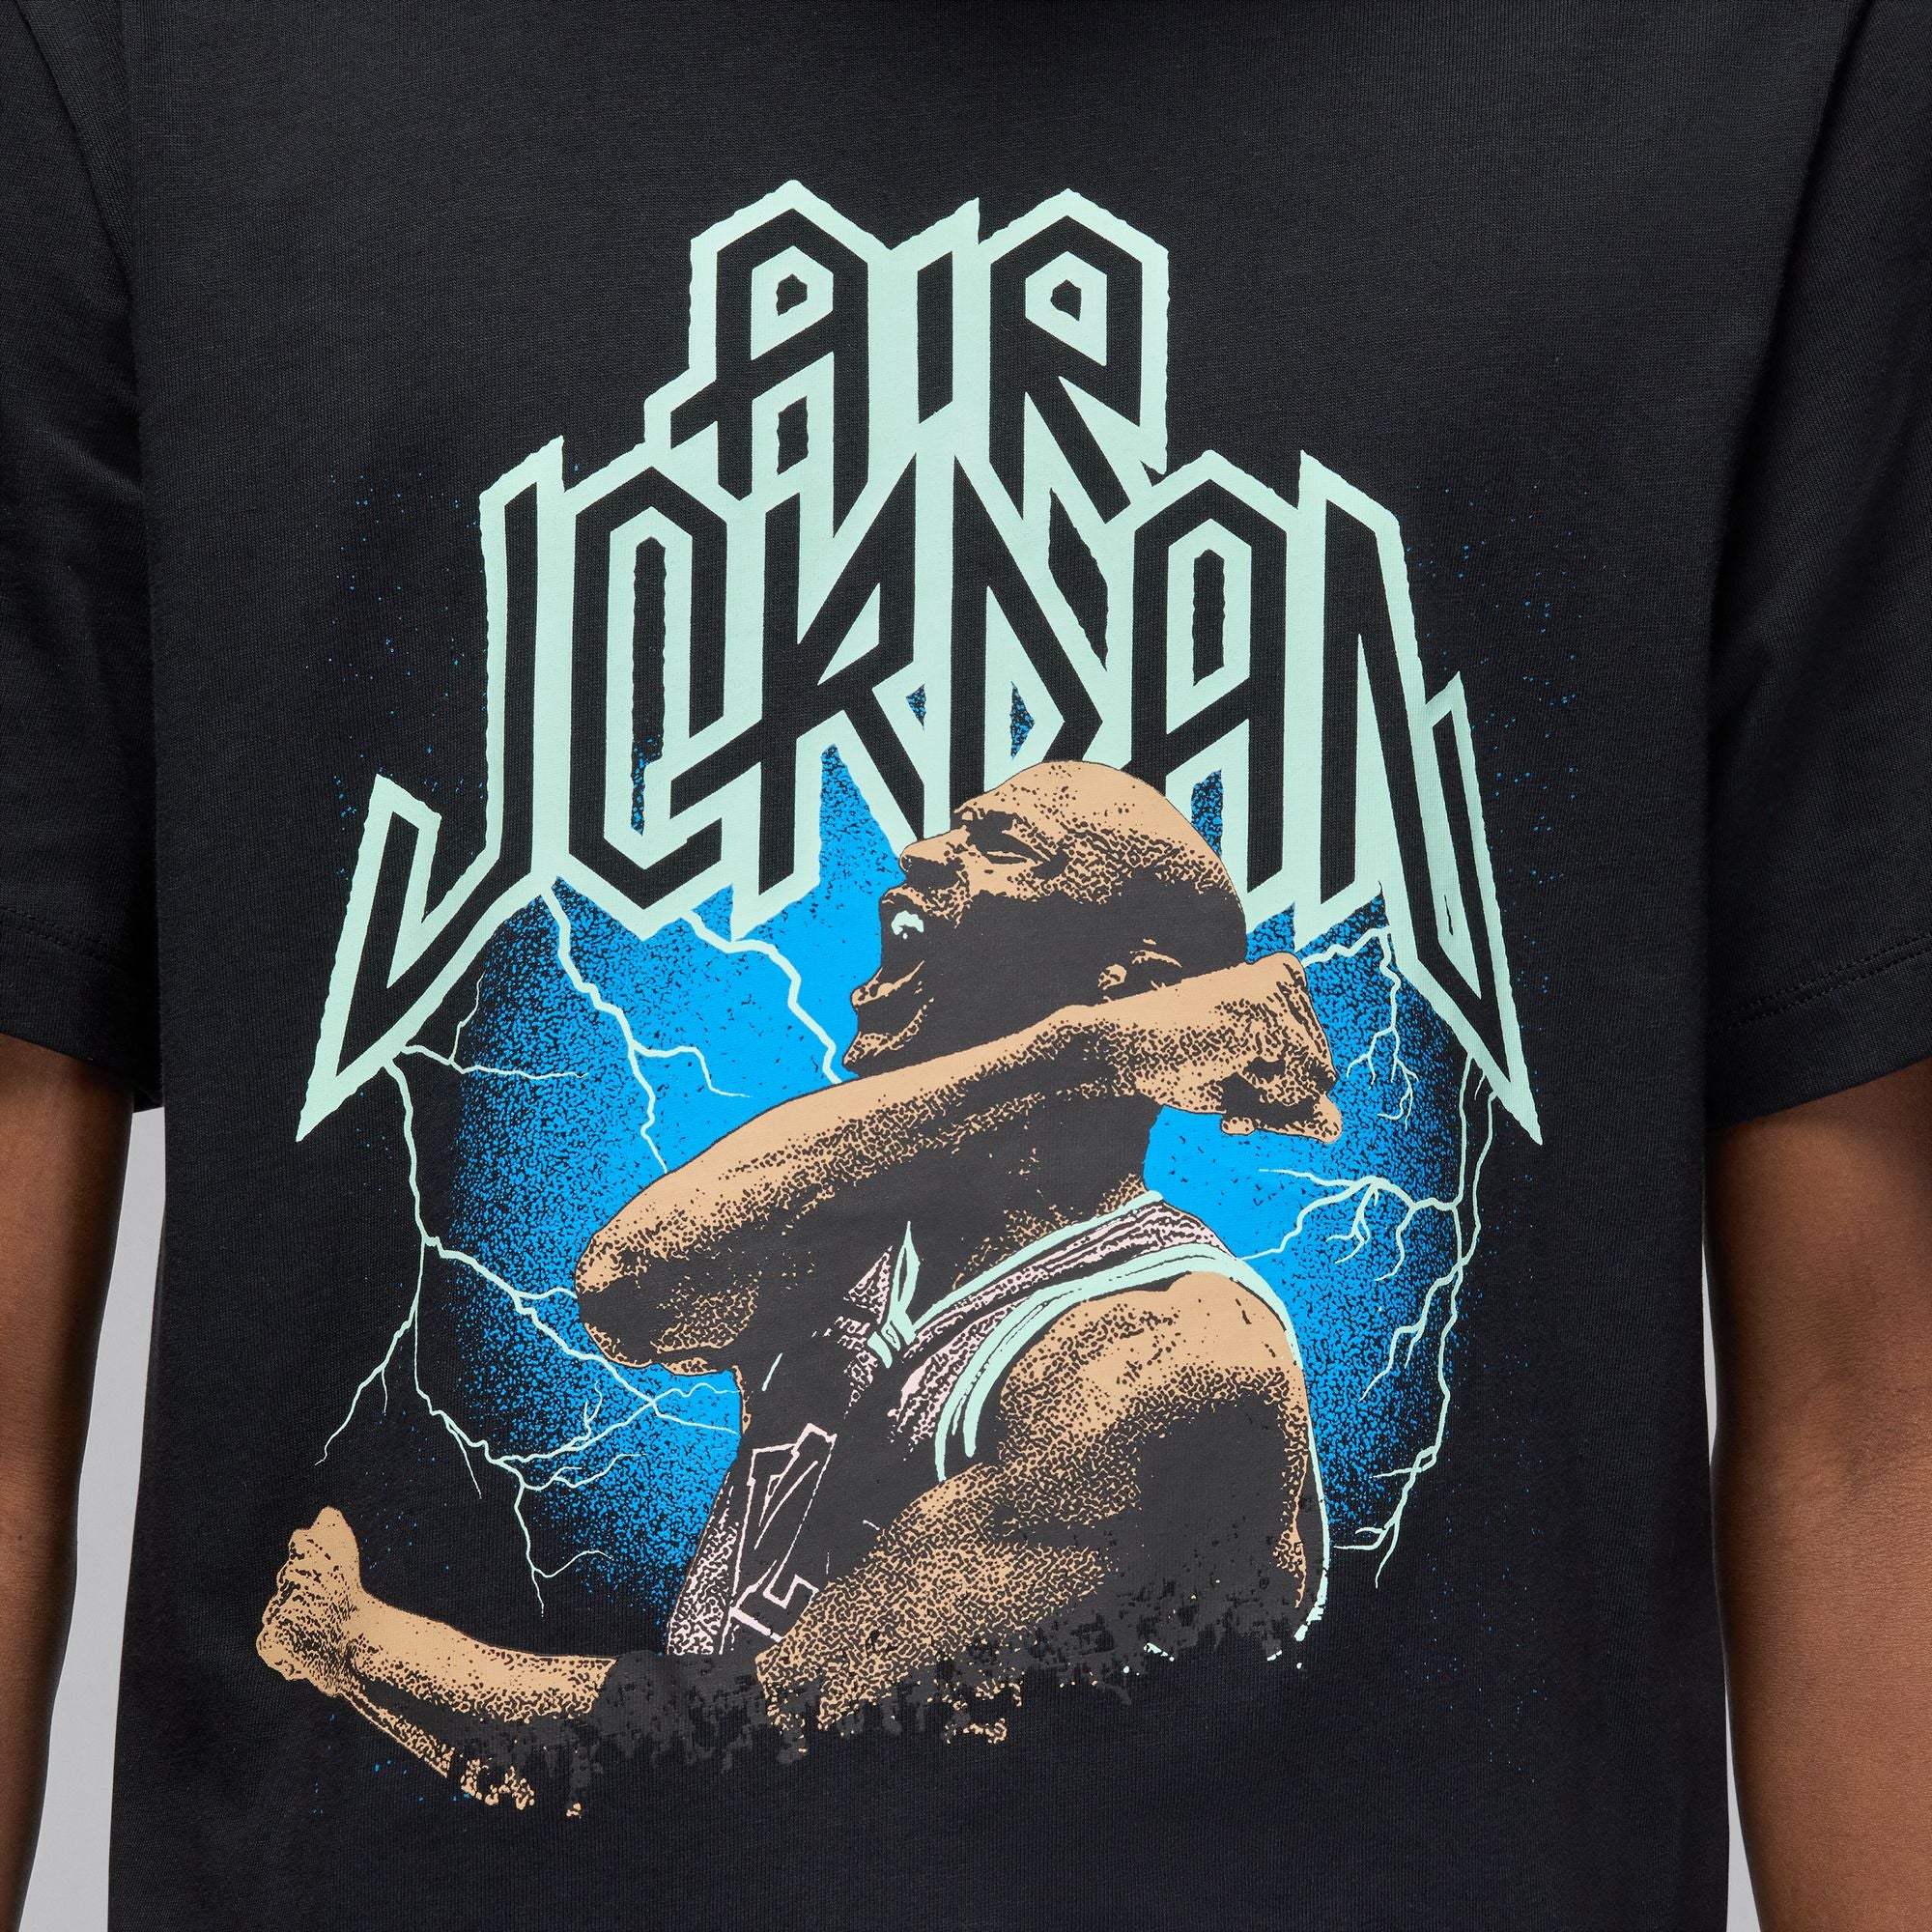 Jordan Sport Men's Dri-FIT T-Shirt